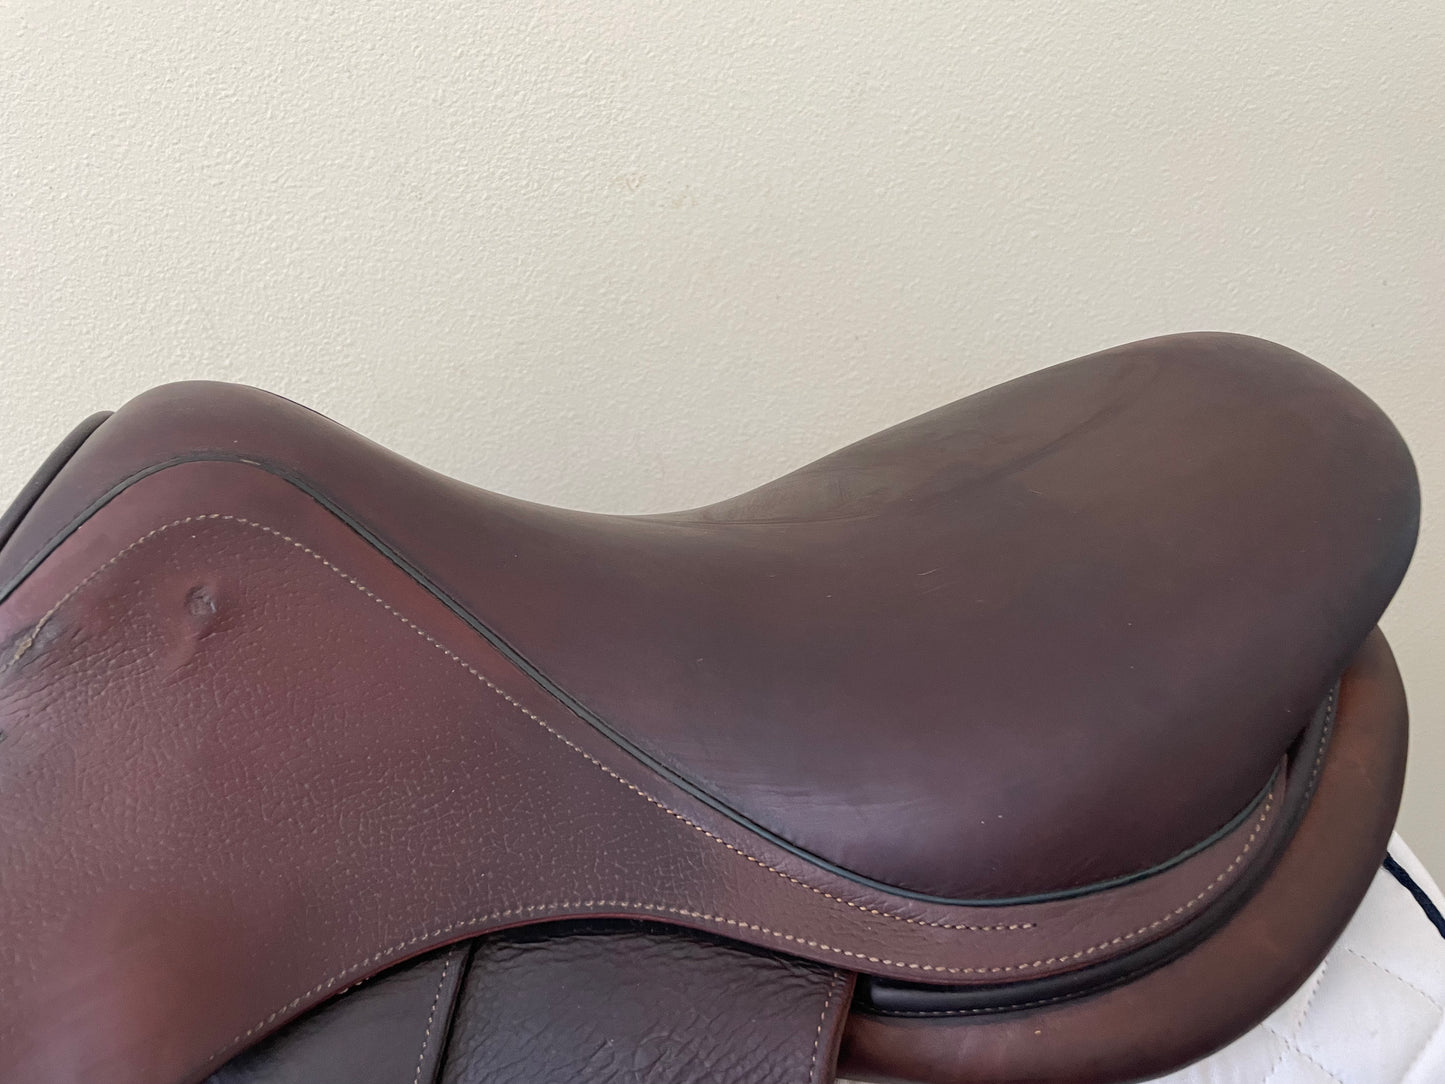 16.5 - 2015 Devoucoux Chiberta Junior, 0A Flap, 5” Dot-to-Dot, Buffalo Leather - Nice Condition